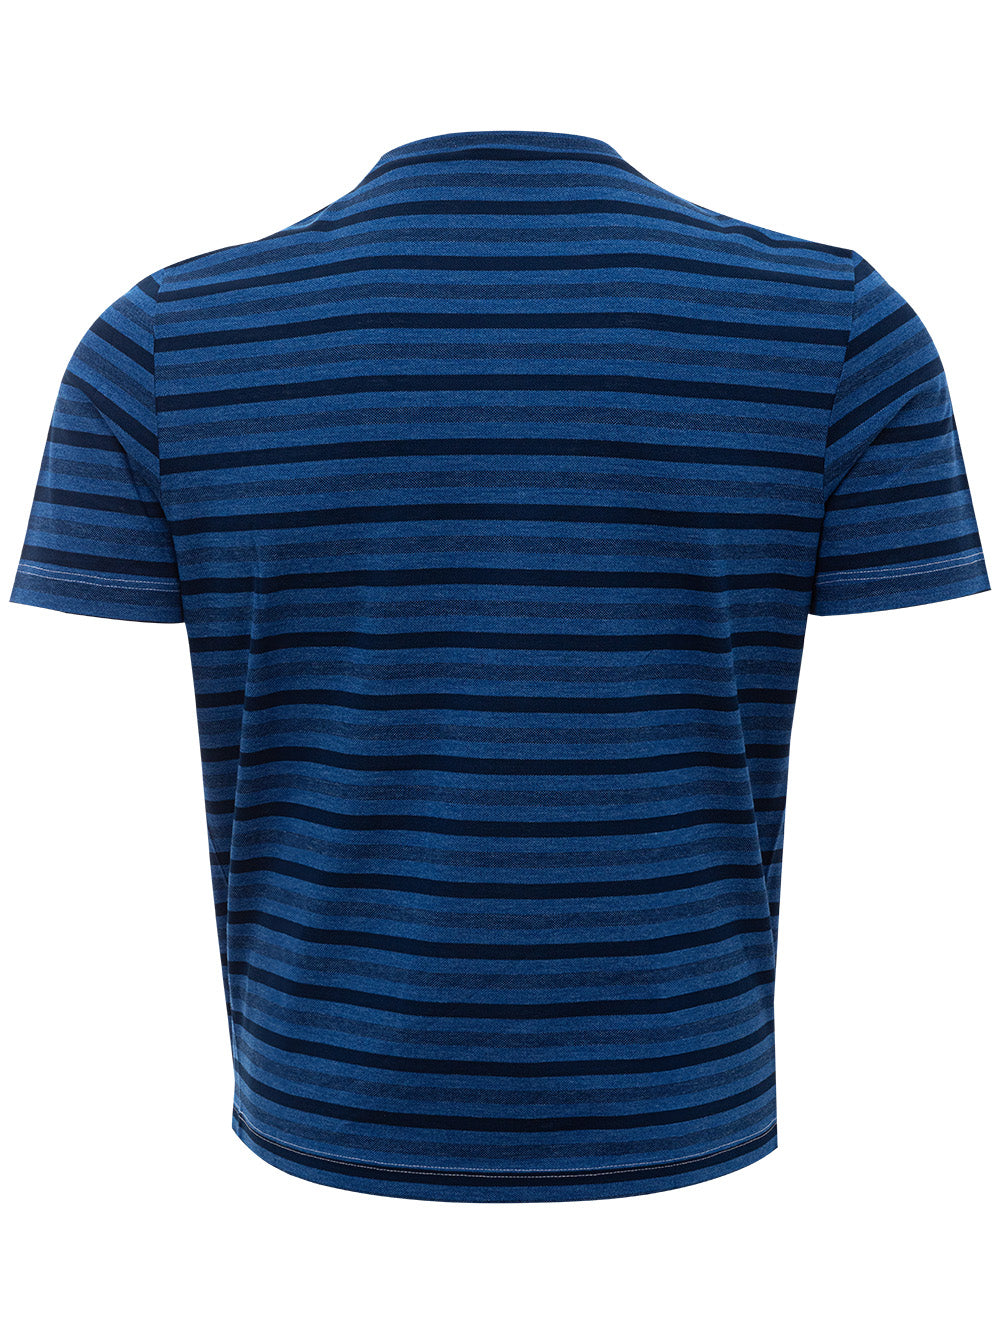 Gran Sasso Blue Striped Cotton T-Shirt